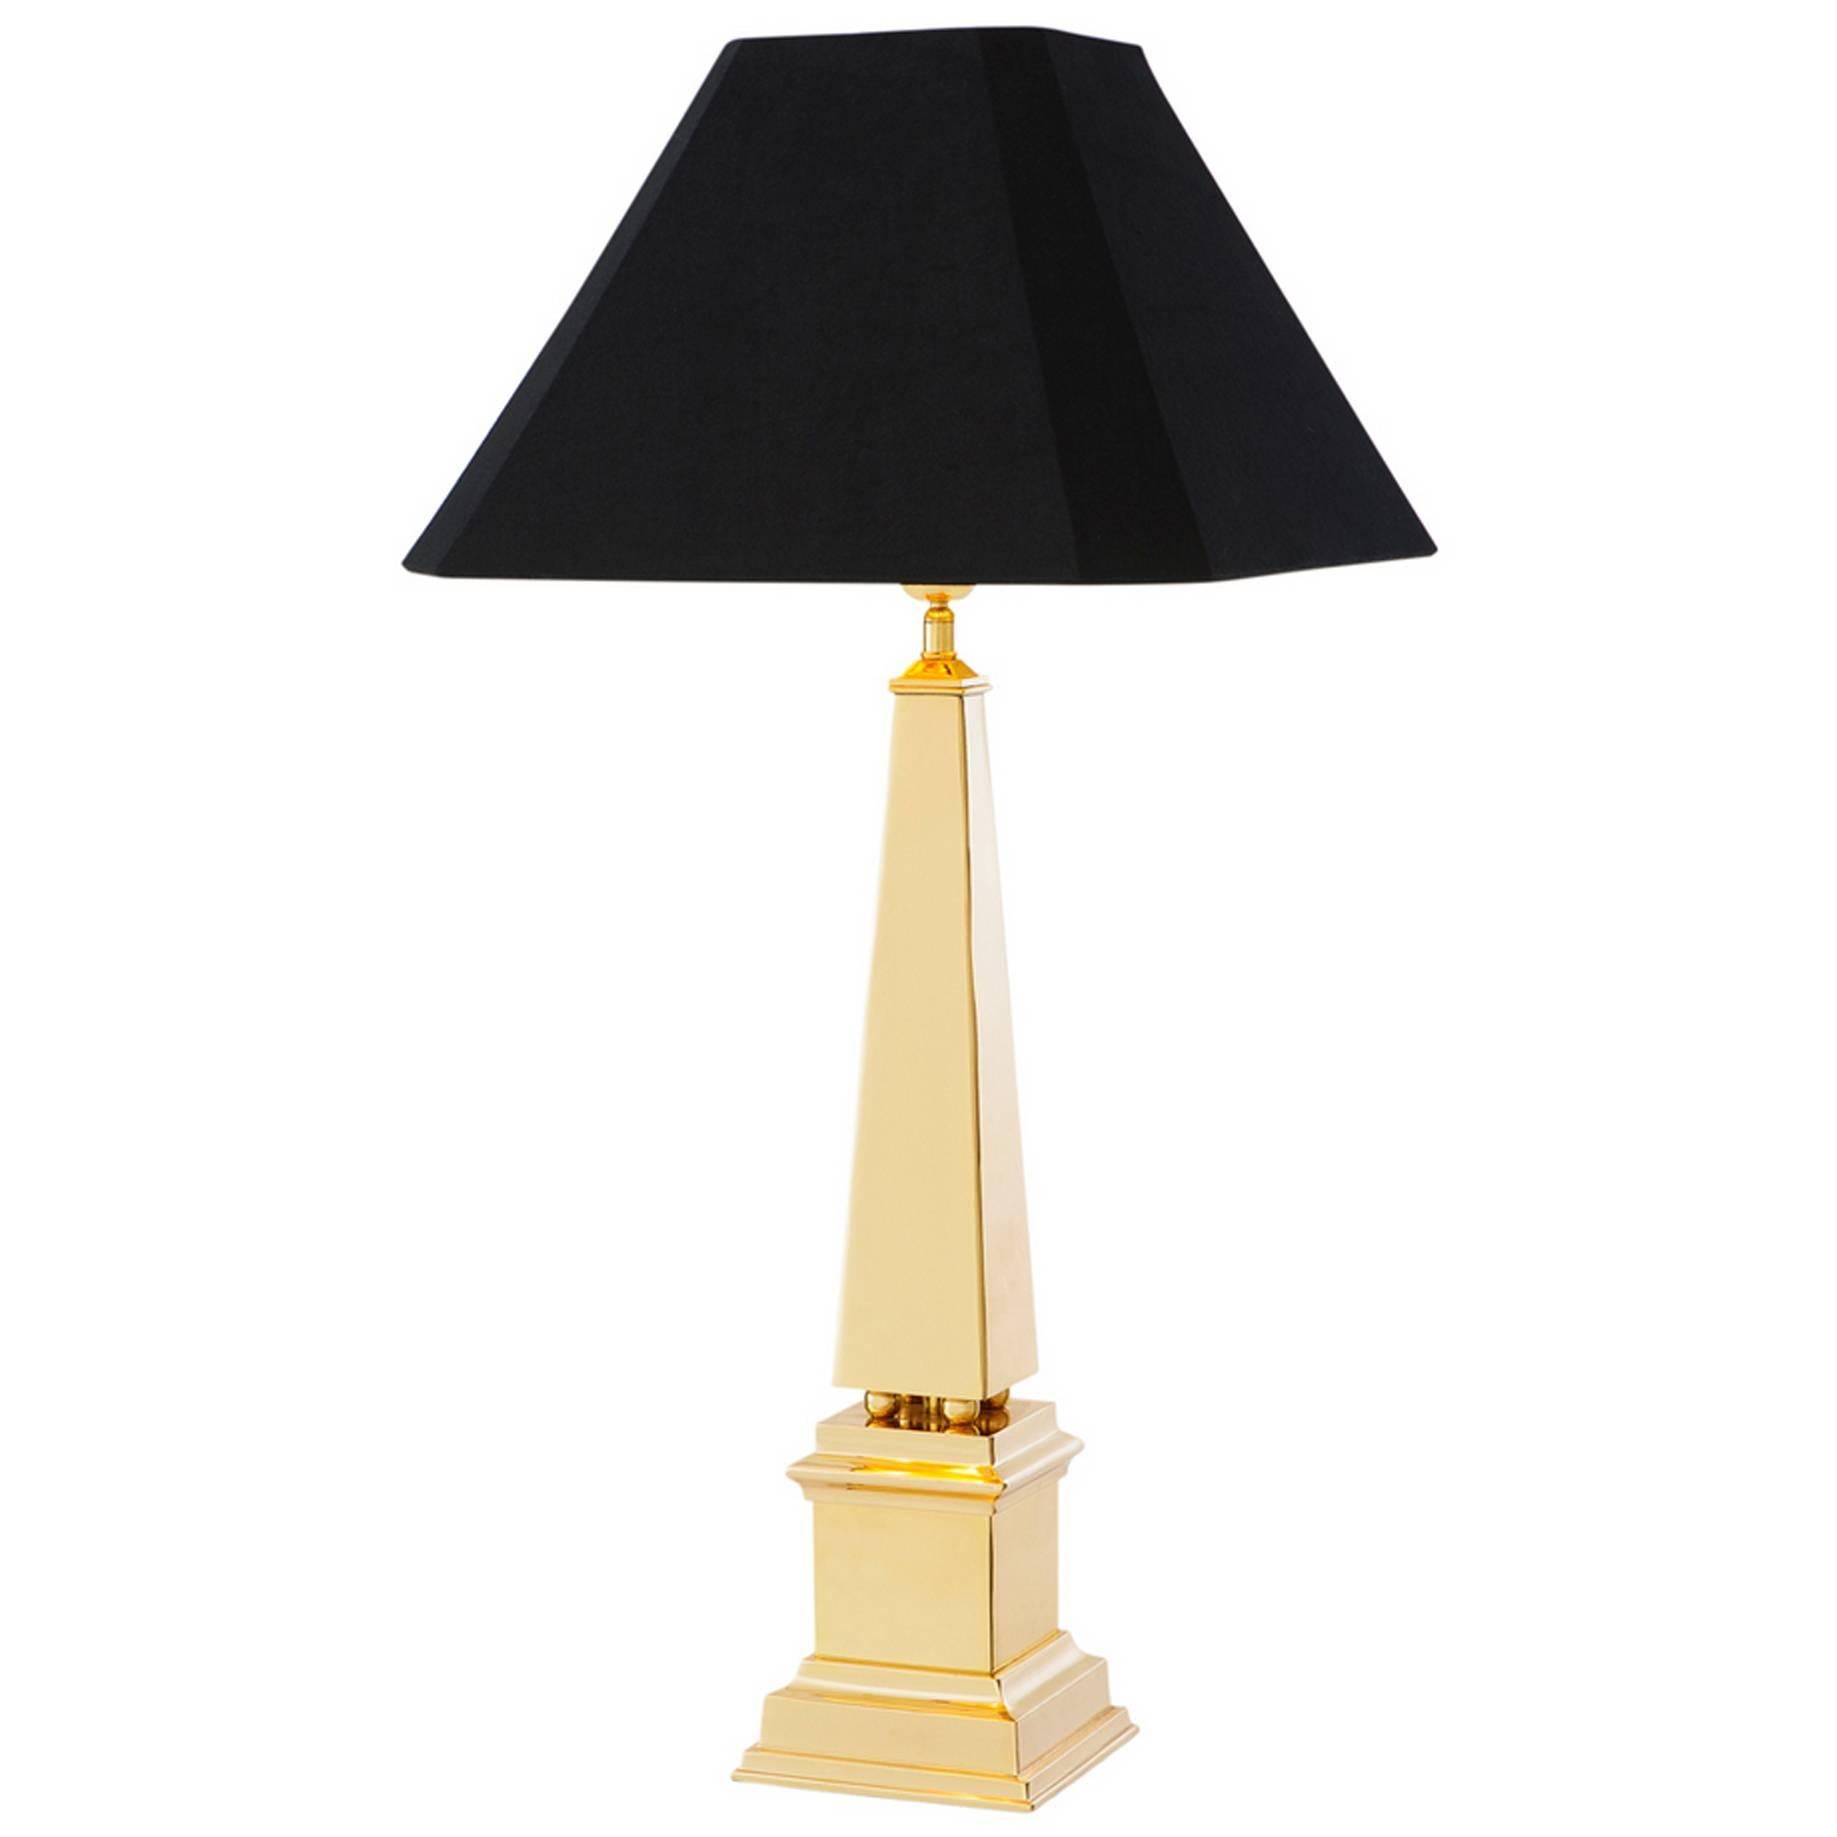 Obelisk Table Lamp in Polished Brass